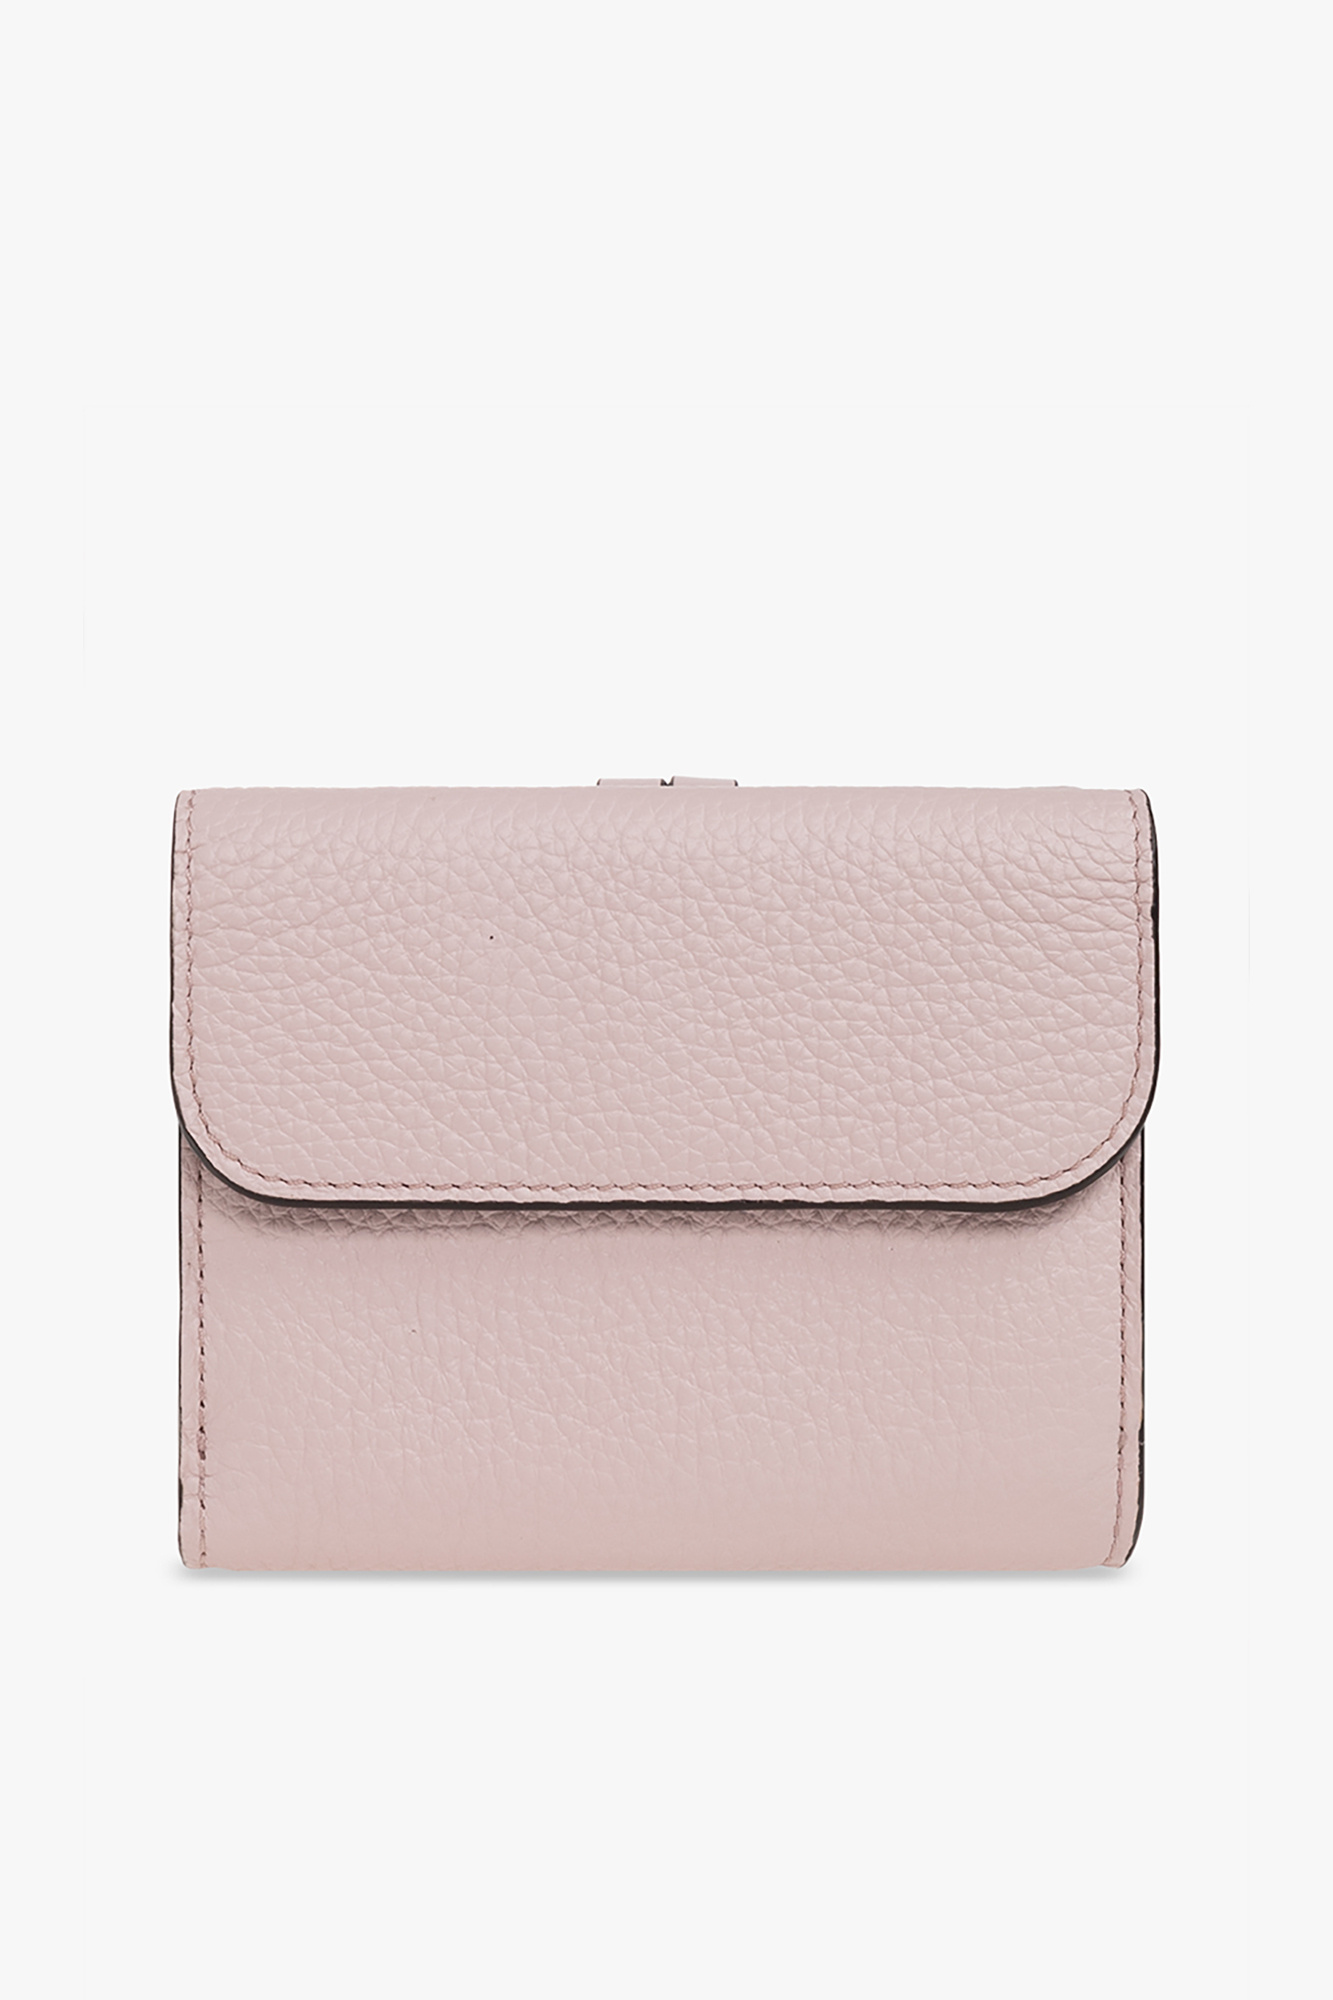 Chloé ‘Alphabet’ leather wallet